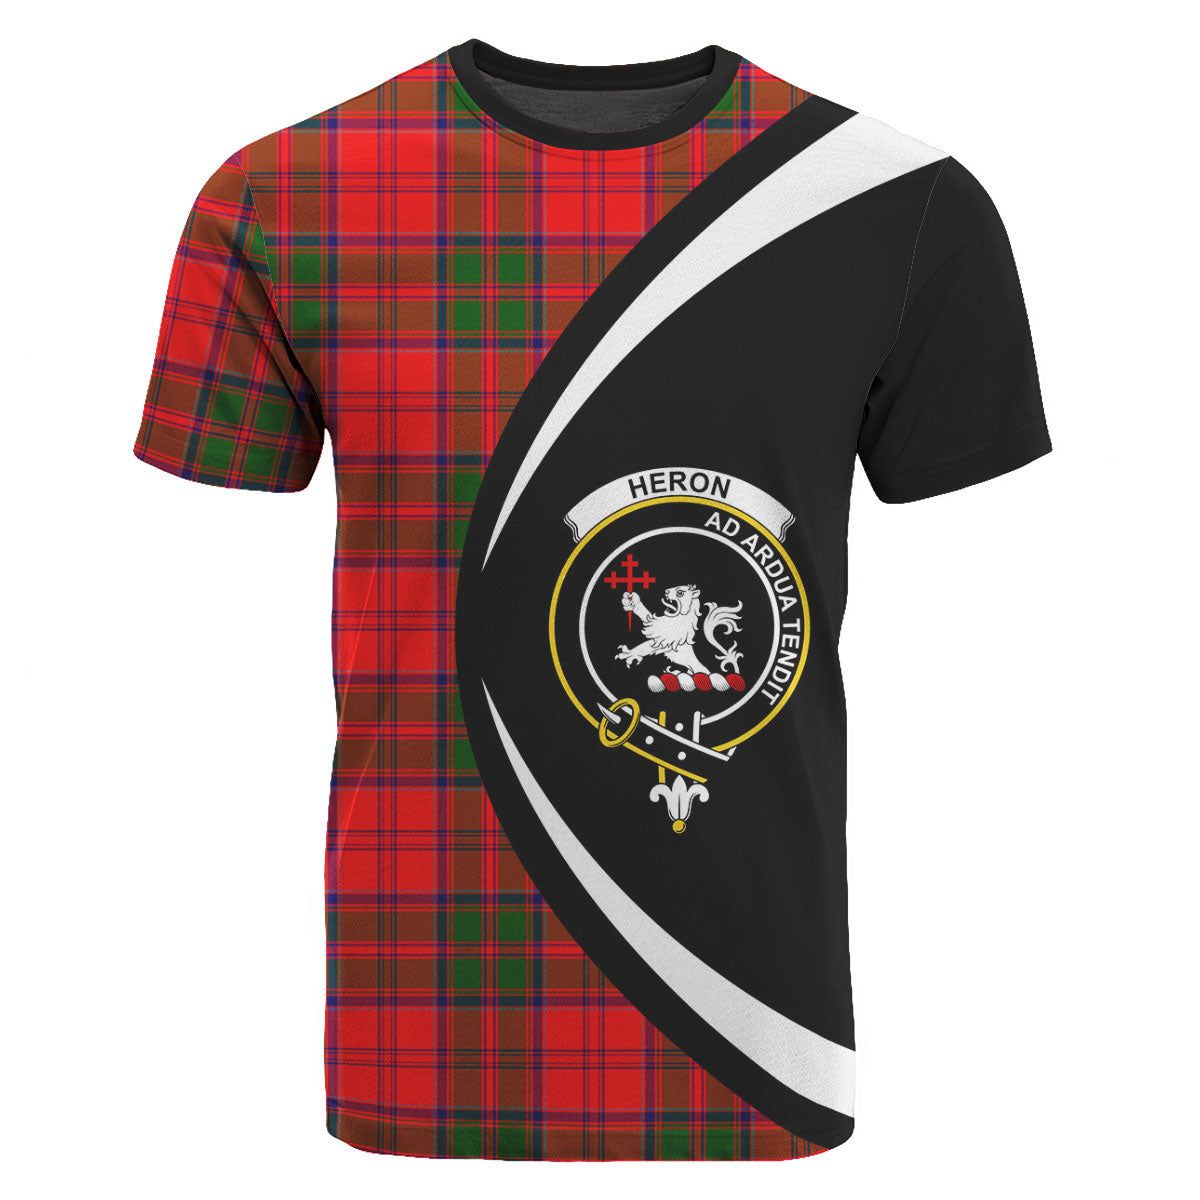 Heron Tartan Crest T-shirt - Circle Style